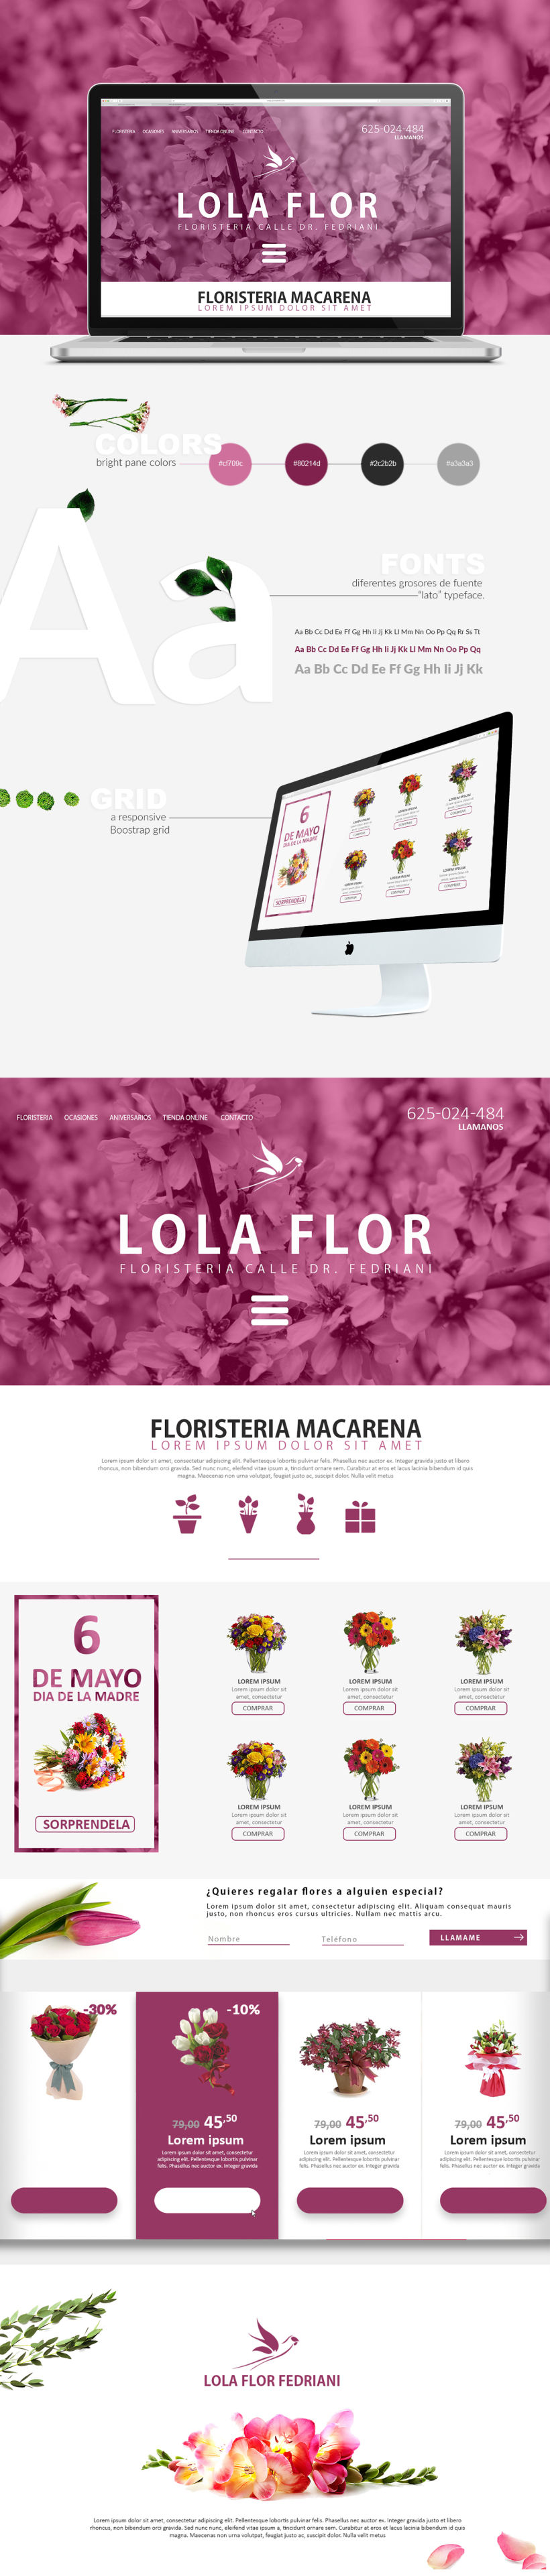 Diseño web Lola Flor Fedriani "Concept Home Page" 0